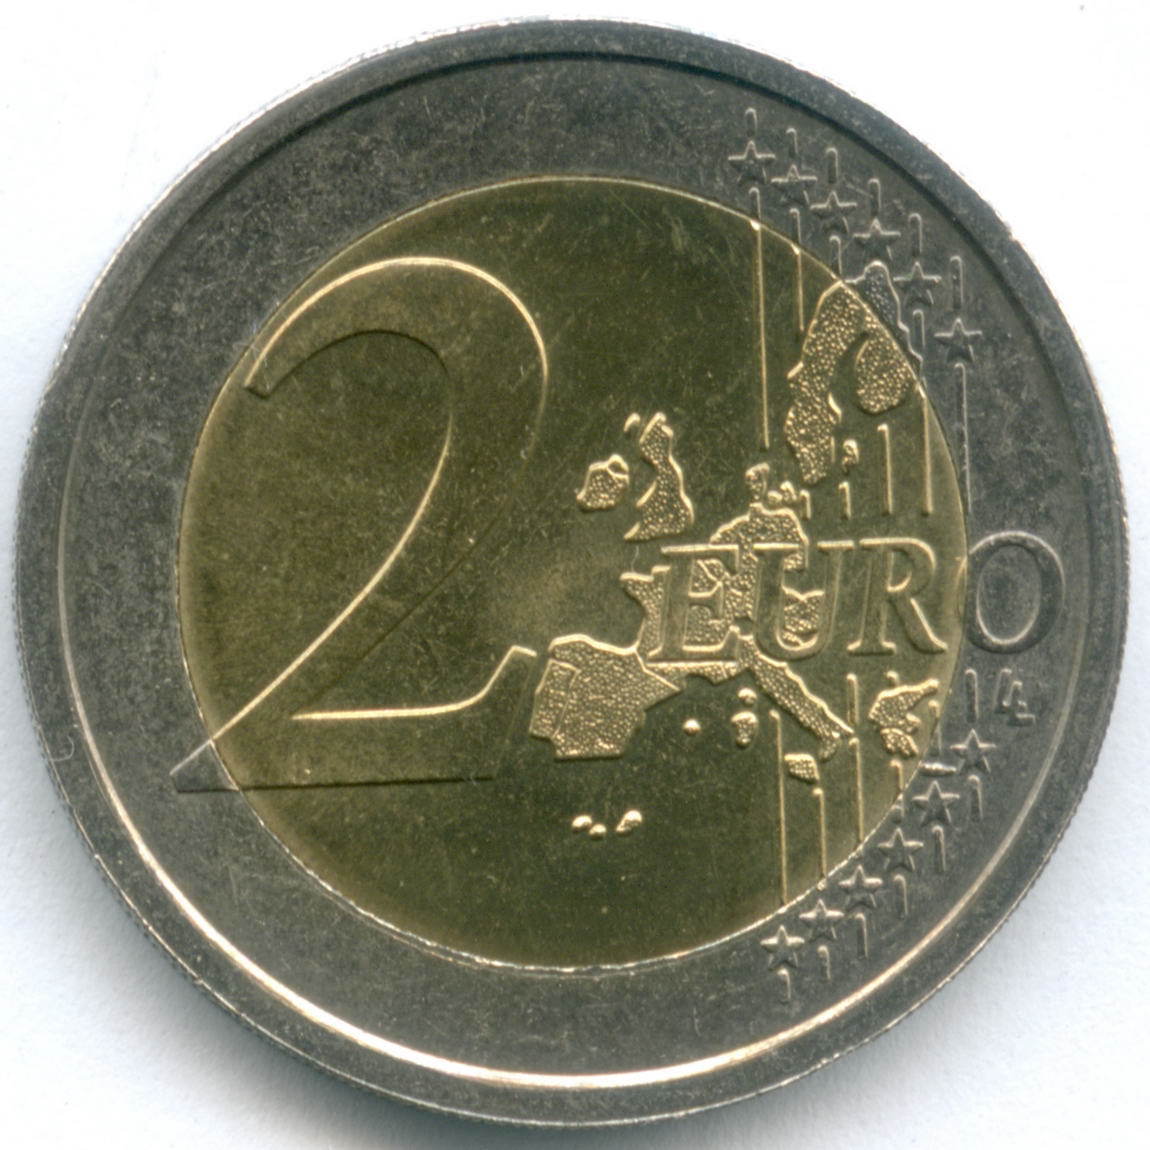 Евро 2001 год. Финские евро 2004 года. 2 Евро Финляндия 2004. Фото монет евро Финляндия Конституция. 2 Евро Мекленбург купить.